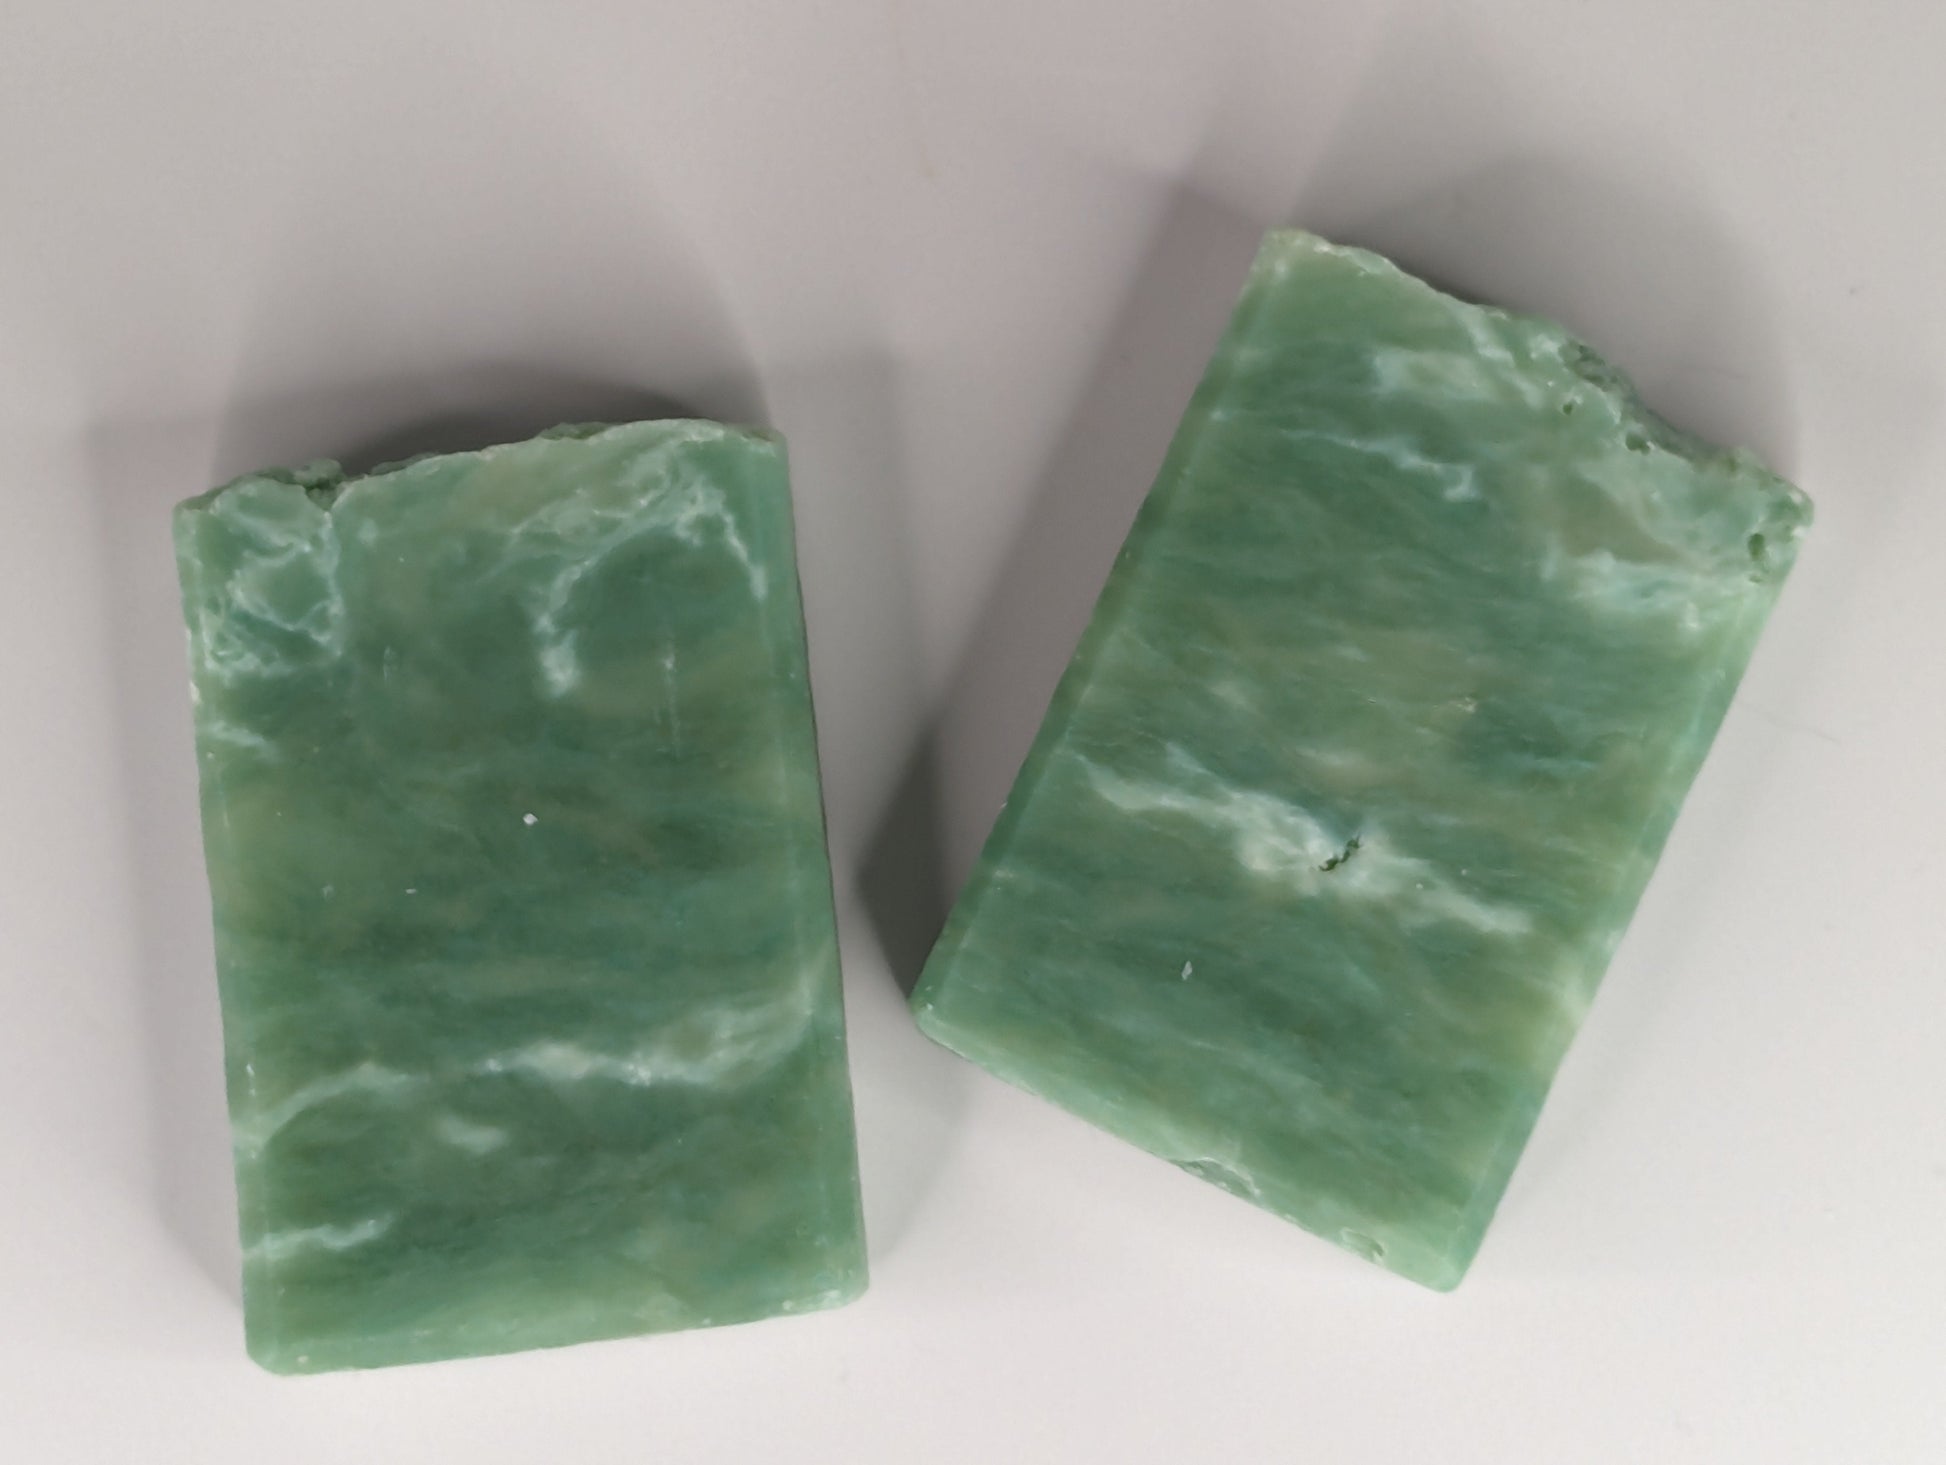 Eucalyptus and Spearmint Essential Oil Soap - Epic Minerals